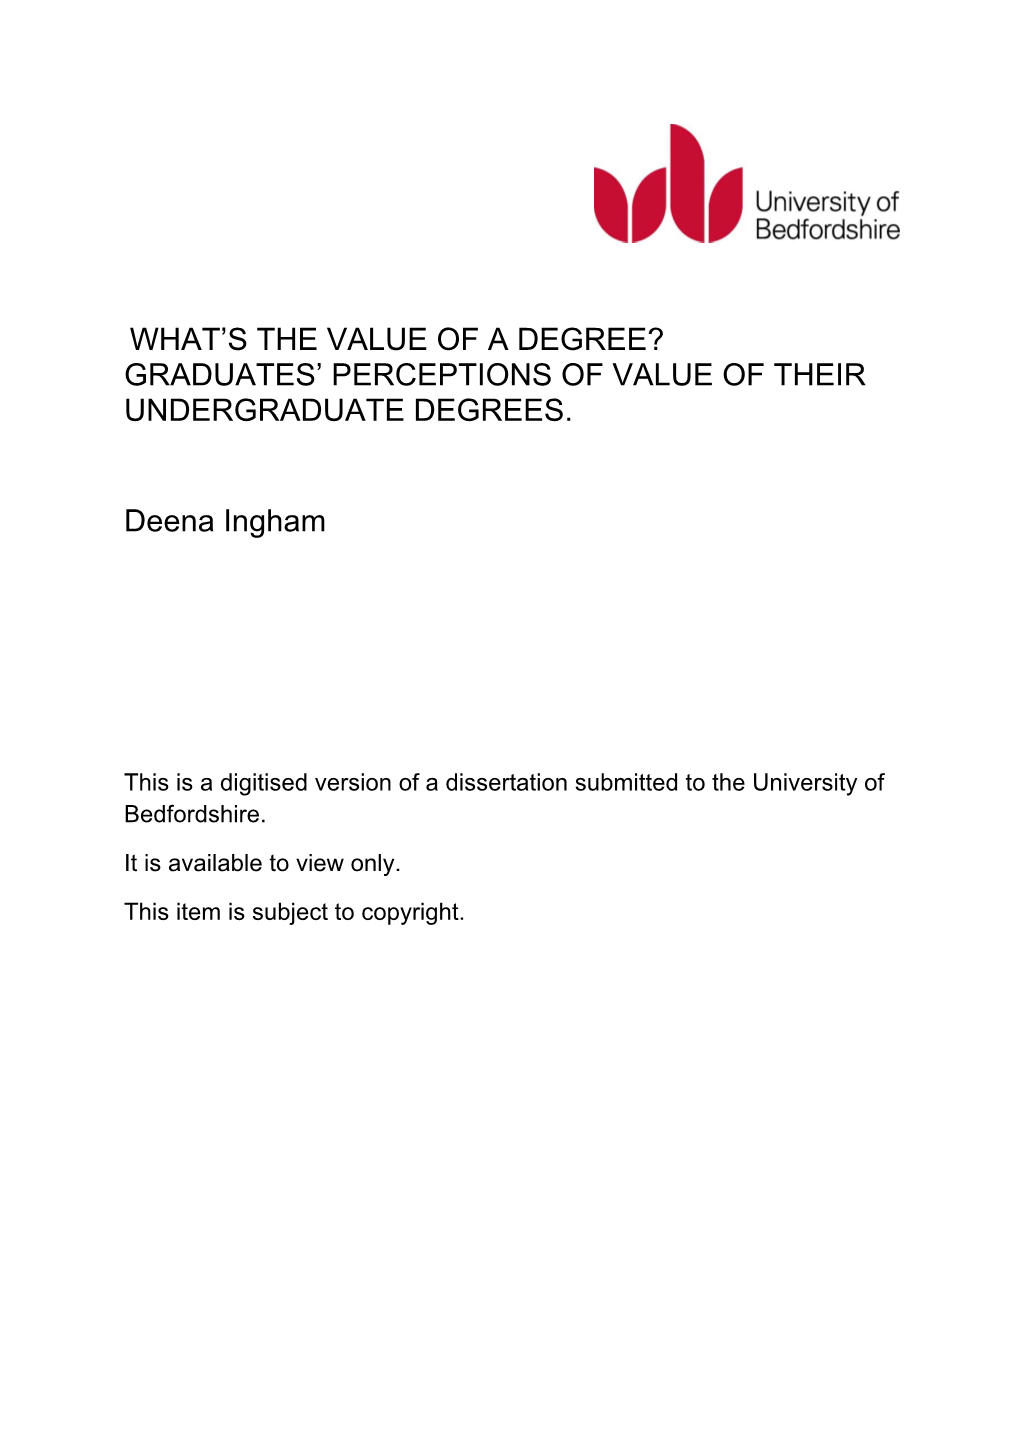 Graduates' Perceptions of Value of Their